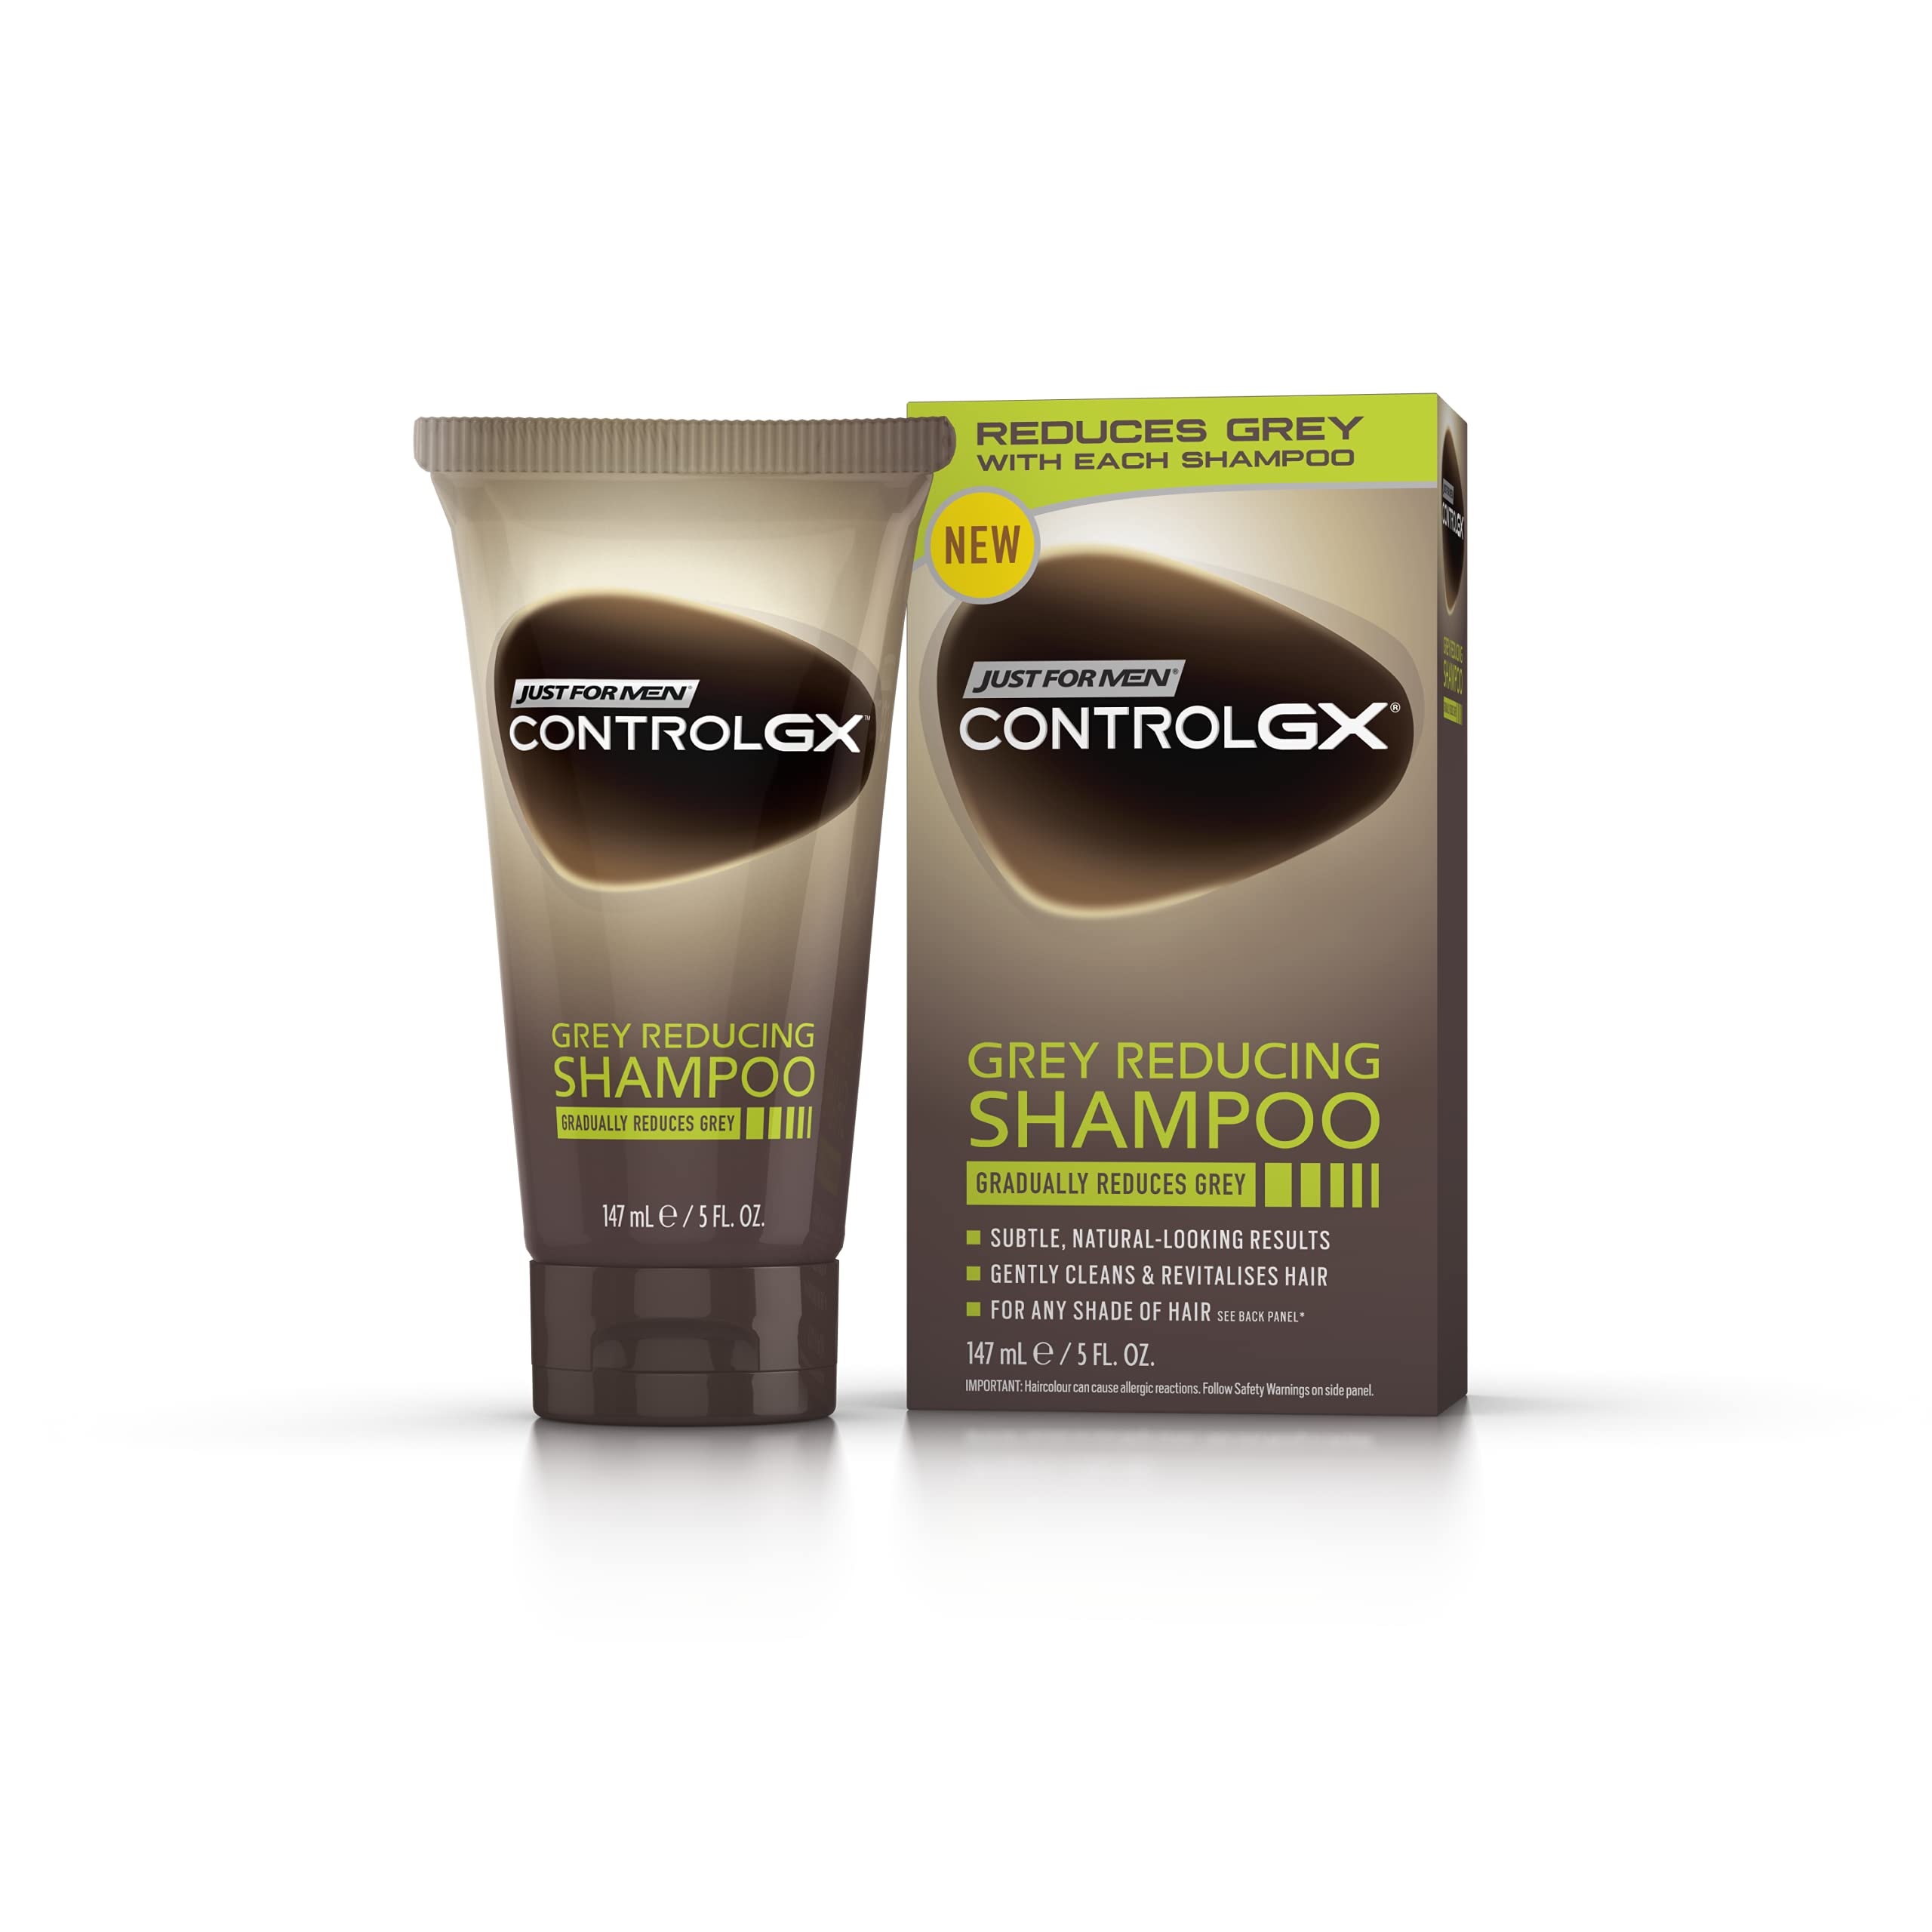 Just for men Control GX, Grey Reducing Shampoo for Grey Hair – All Shades, 147 ml